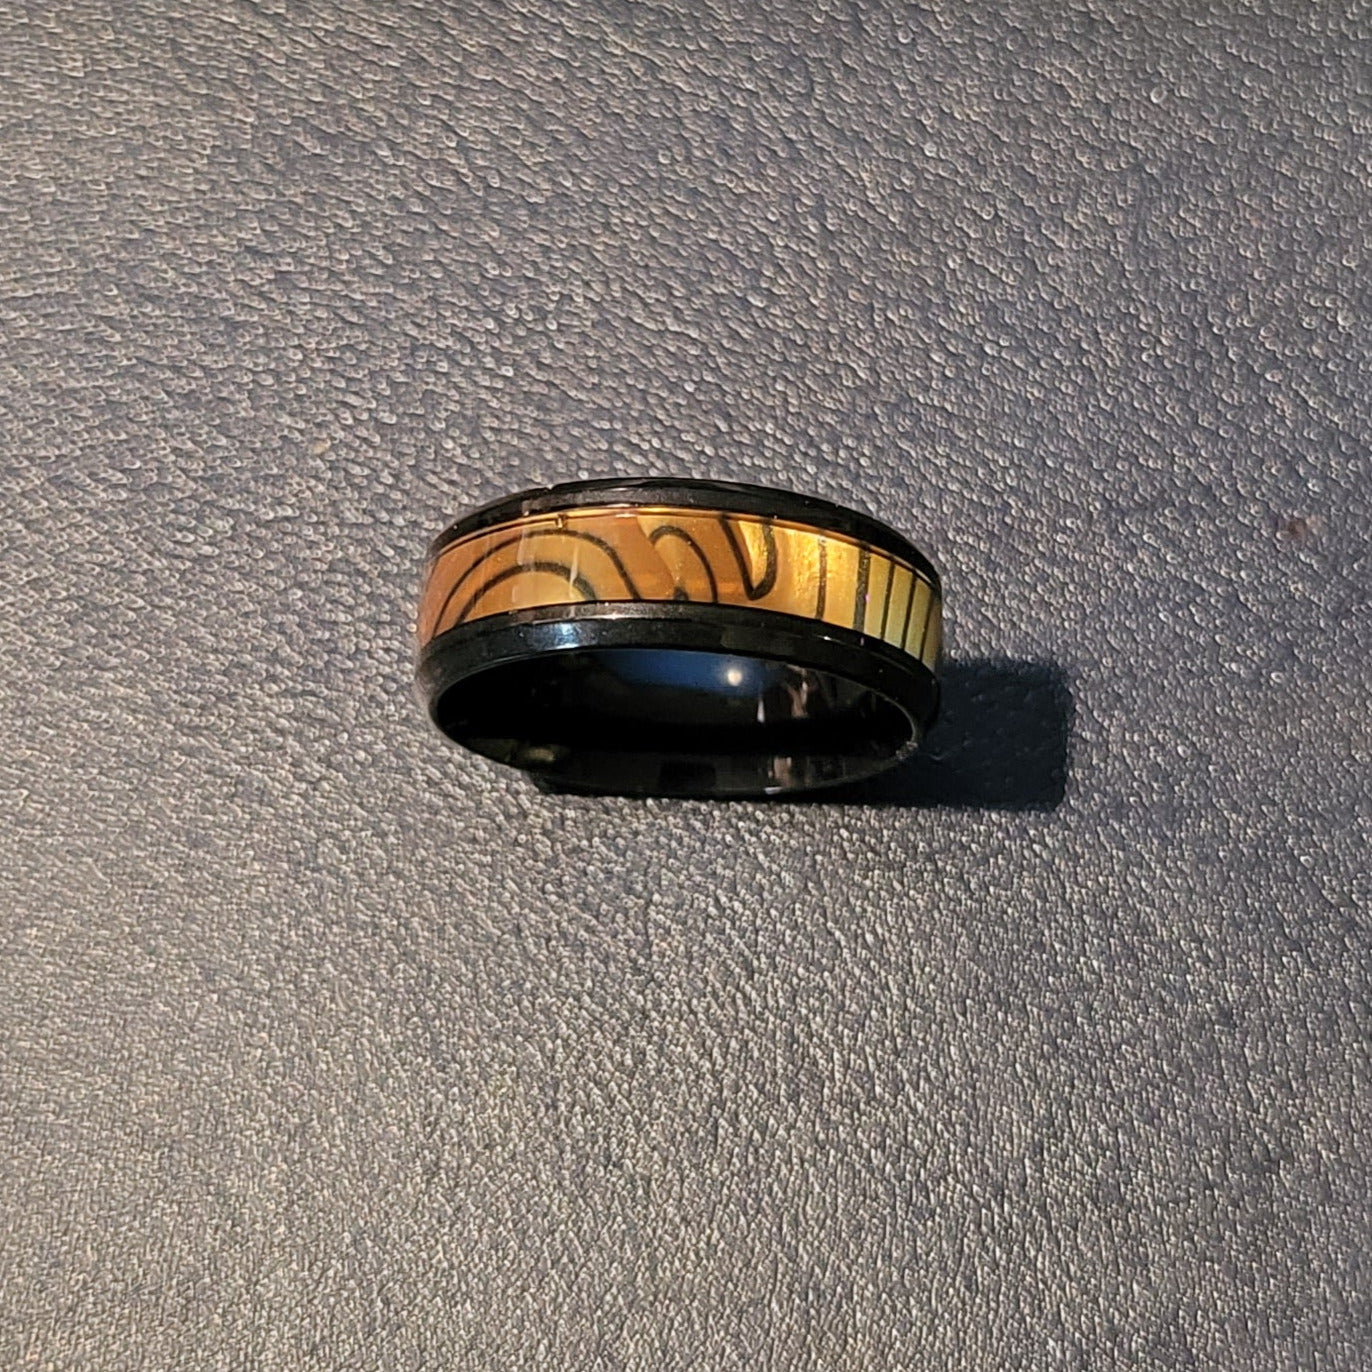 Think Engraved wedding Band Custom Engraved Men's Tiger's Eye Opal Wedding Ring - Guy's Handwriting Ring